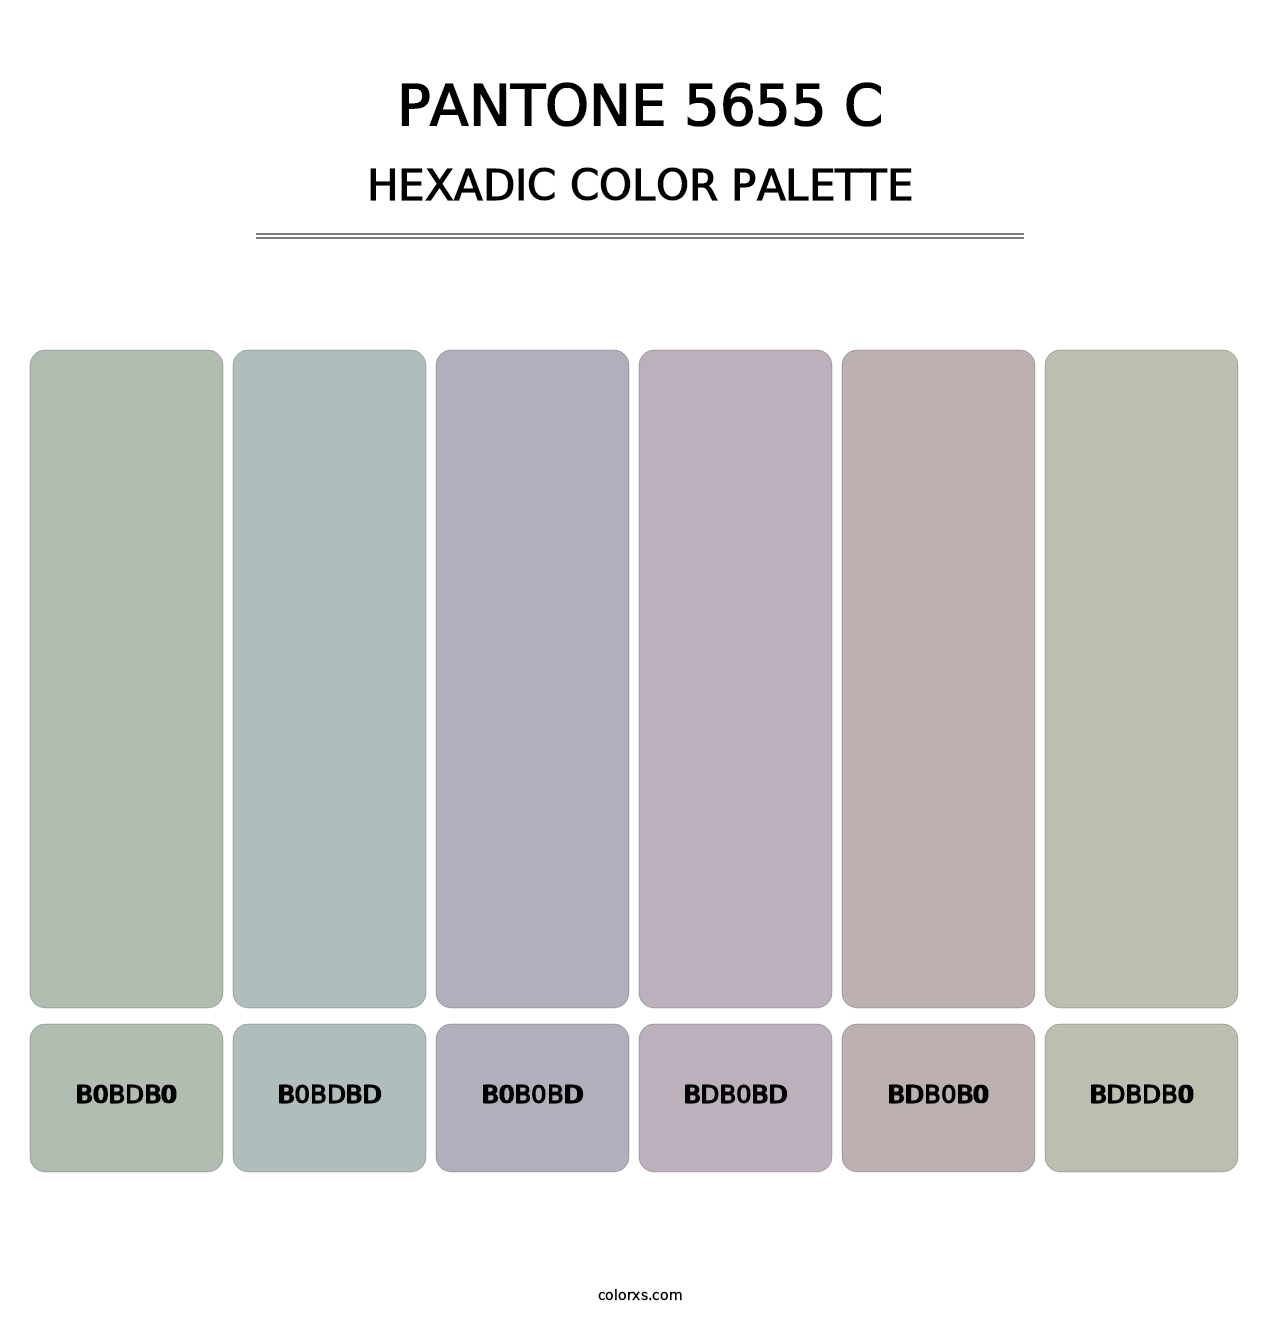 PANTONE 5655 C - Hexadic Color Palette